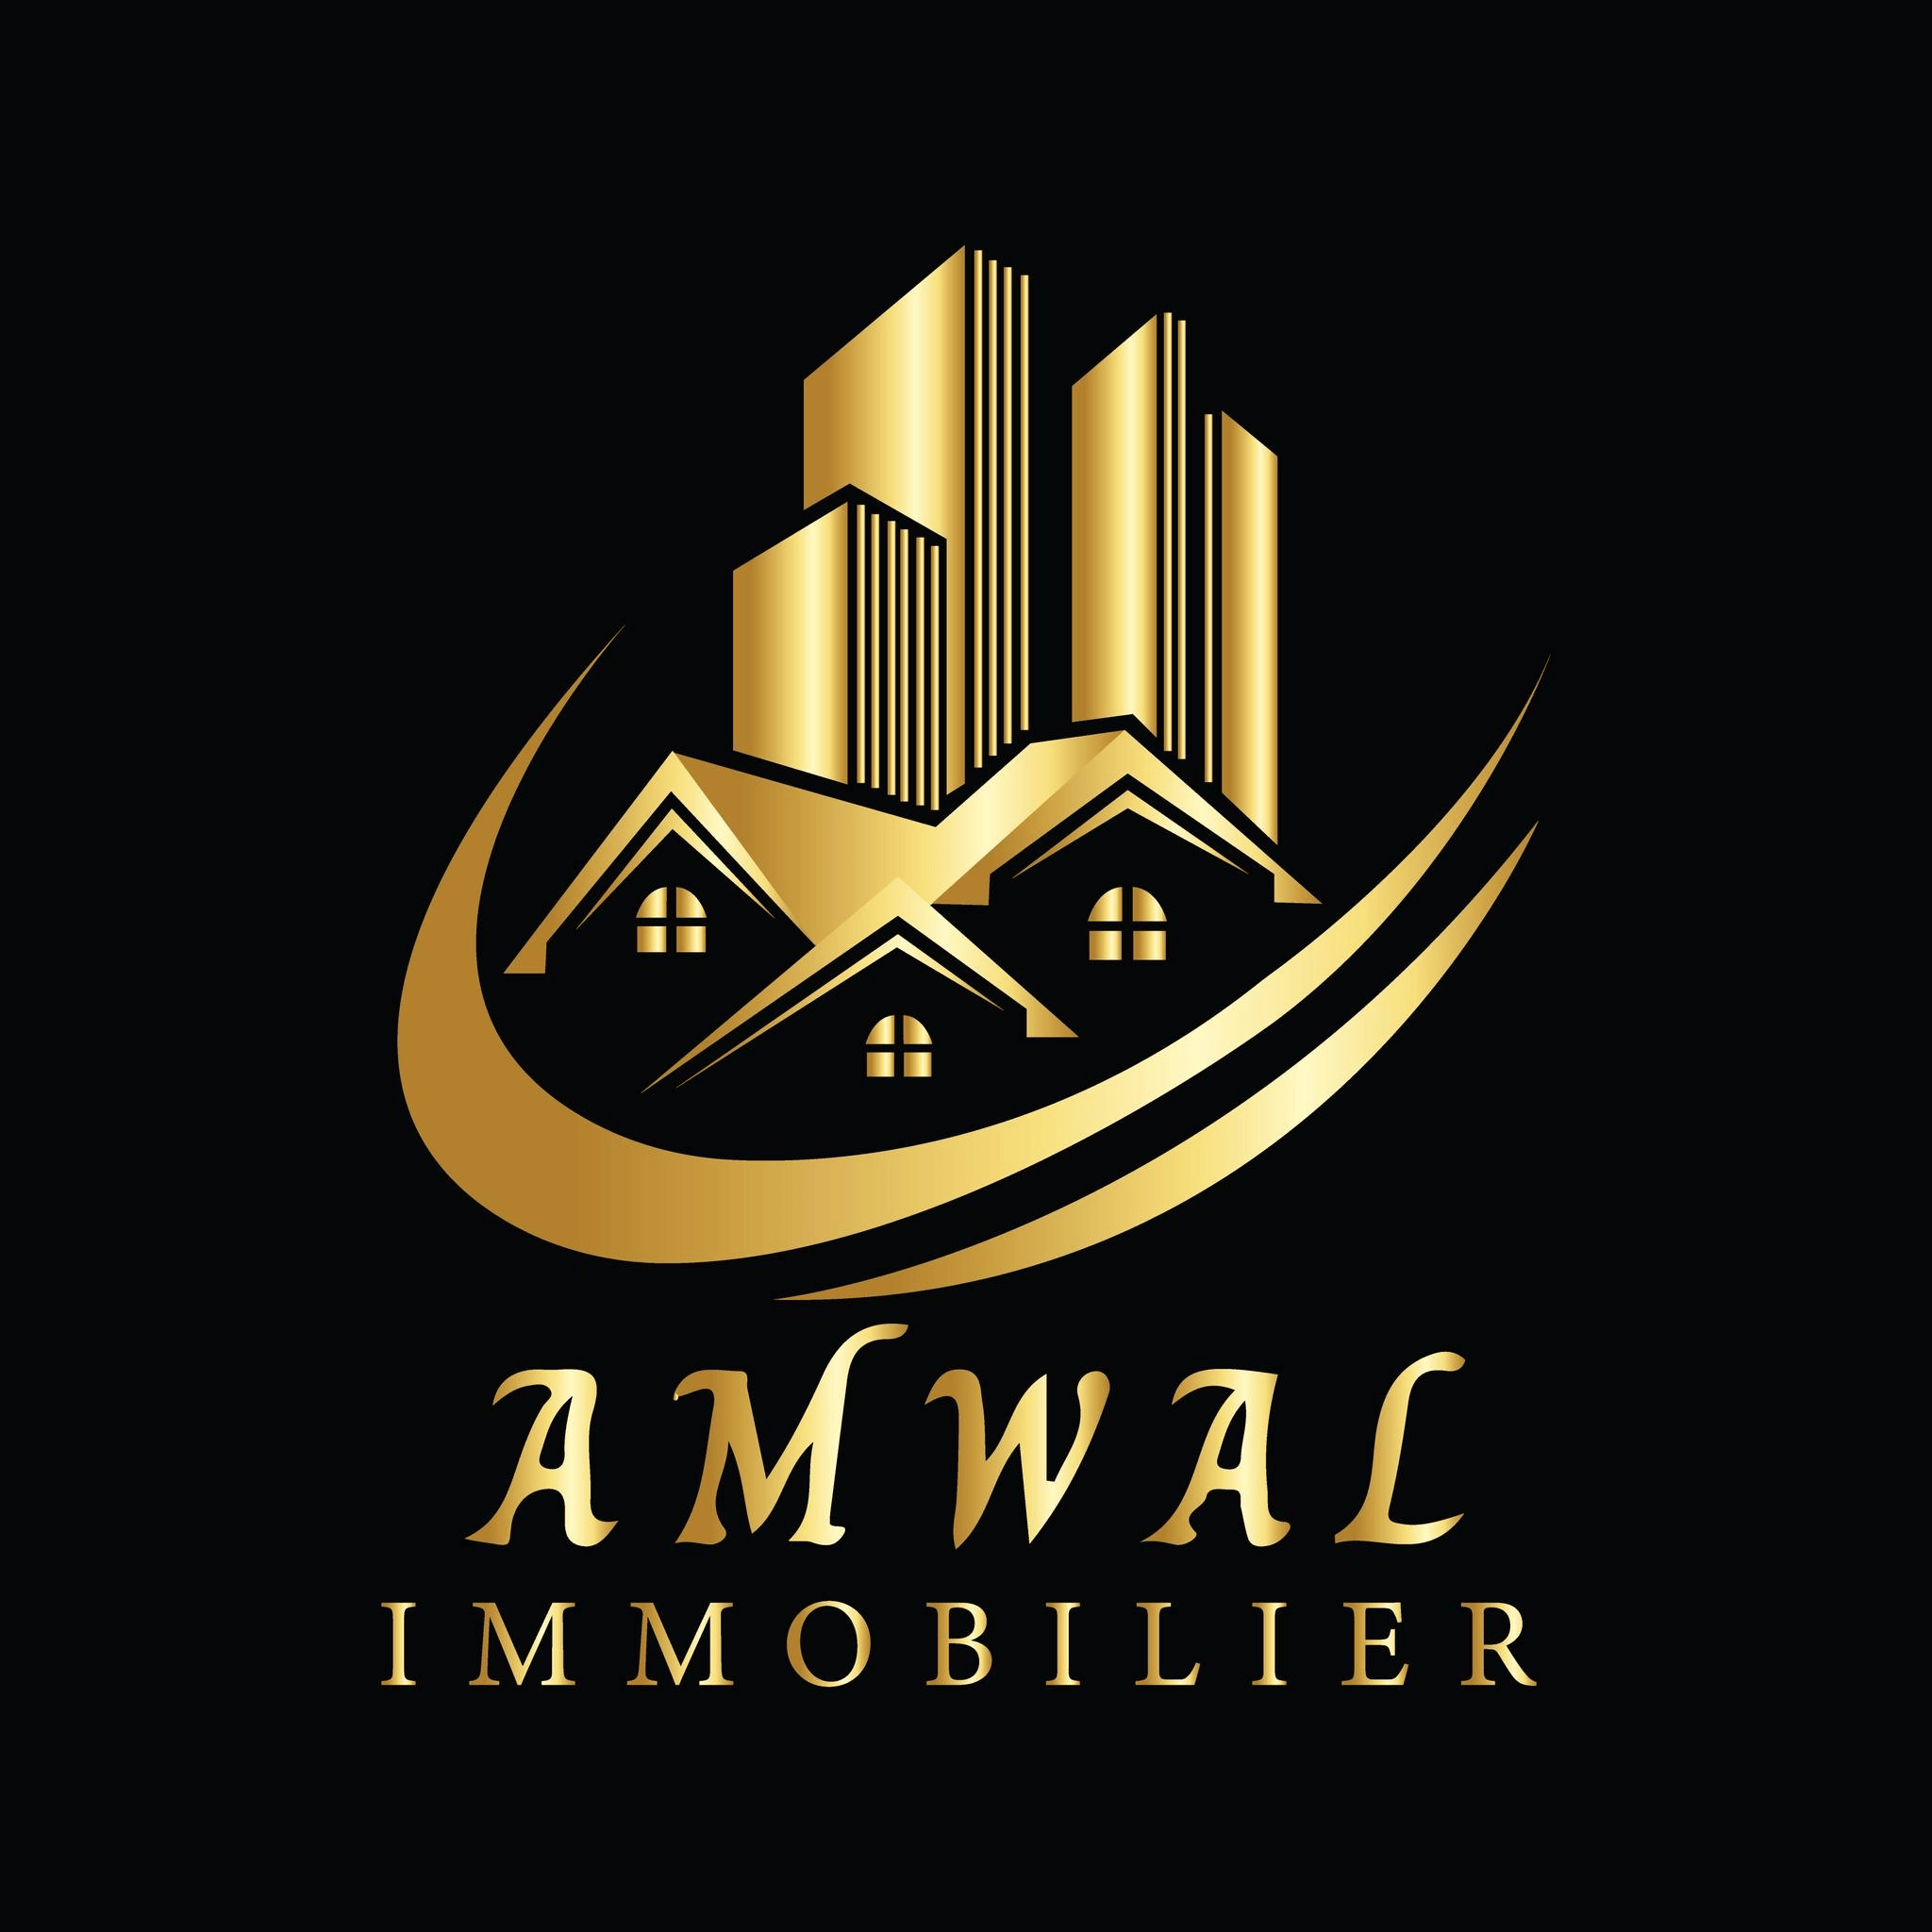 Shop's avatar of Amwal immobilier on tayara